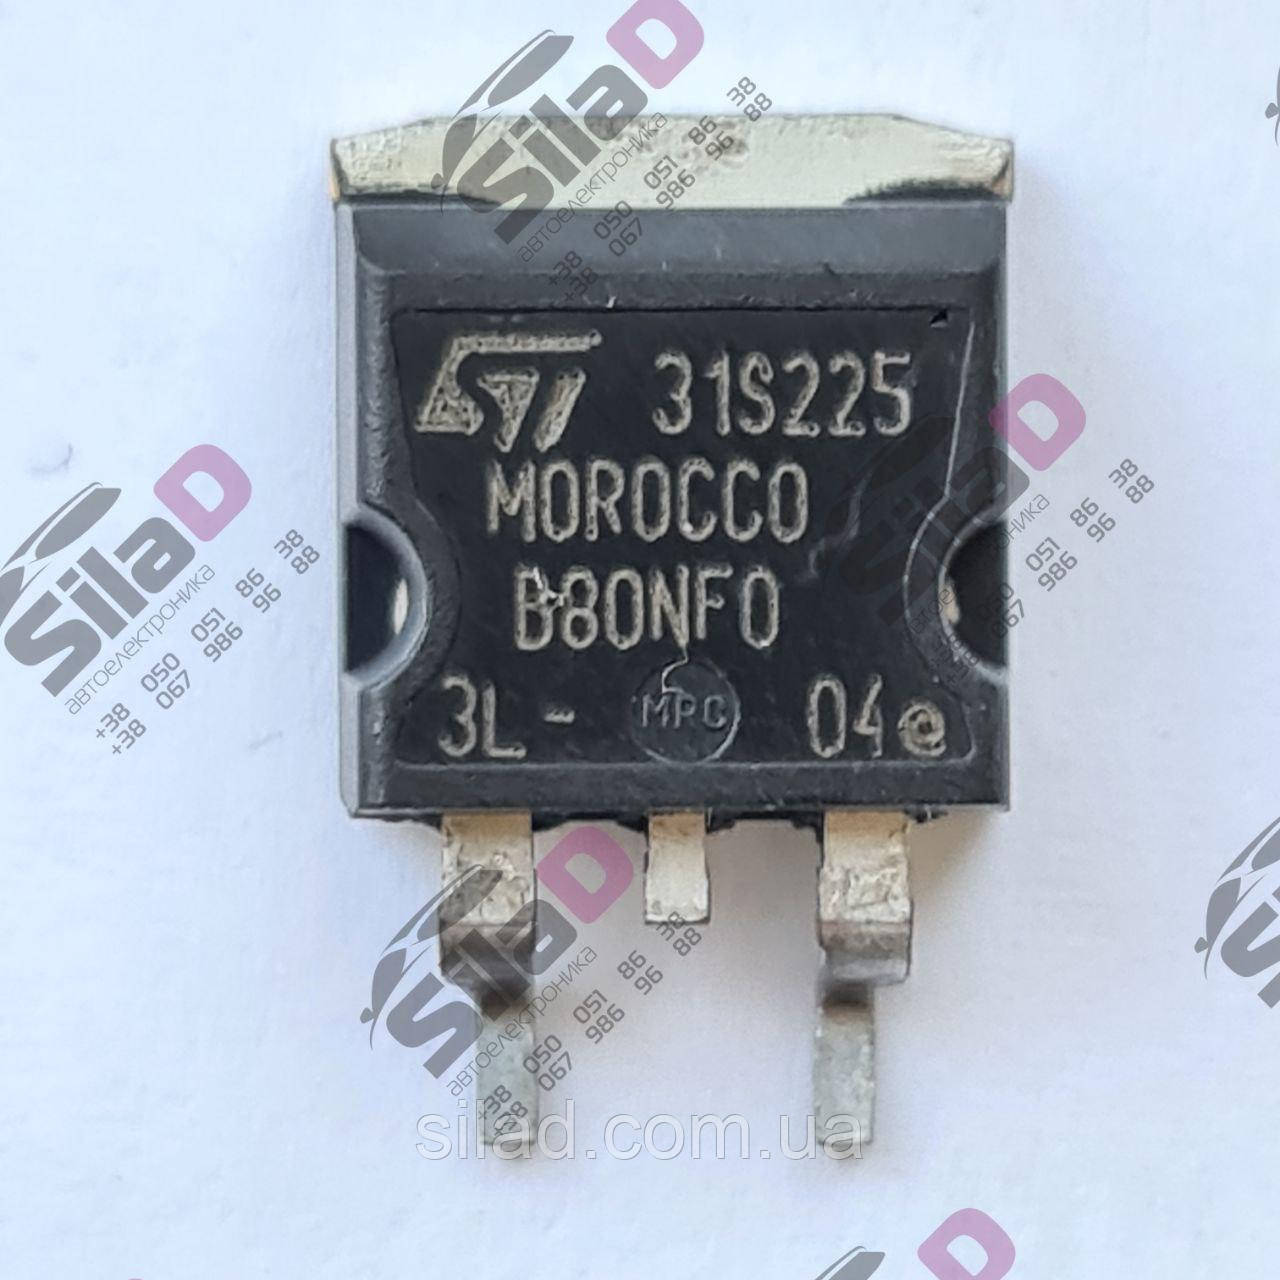 Транзистор 80NF03L-04 STB80NF03L-04T4 STMicroelectronics корпус D2PAK TO-263-3